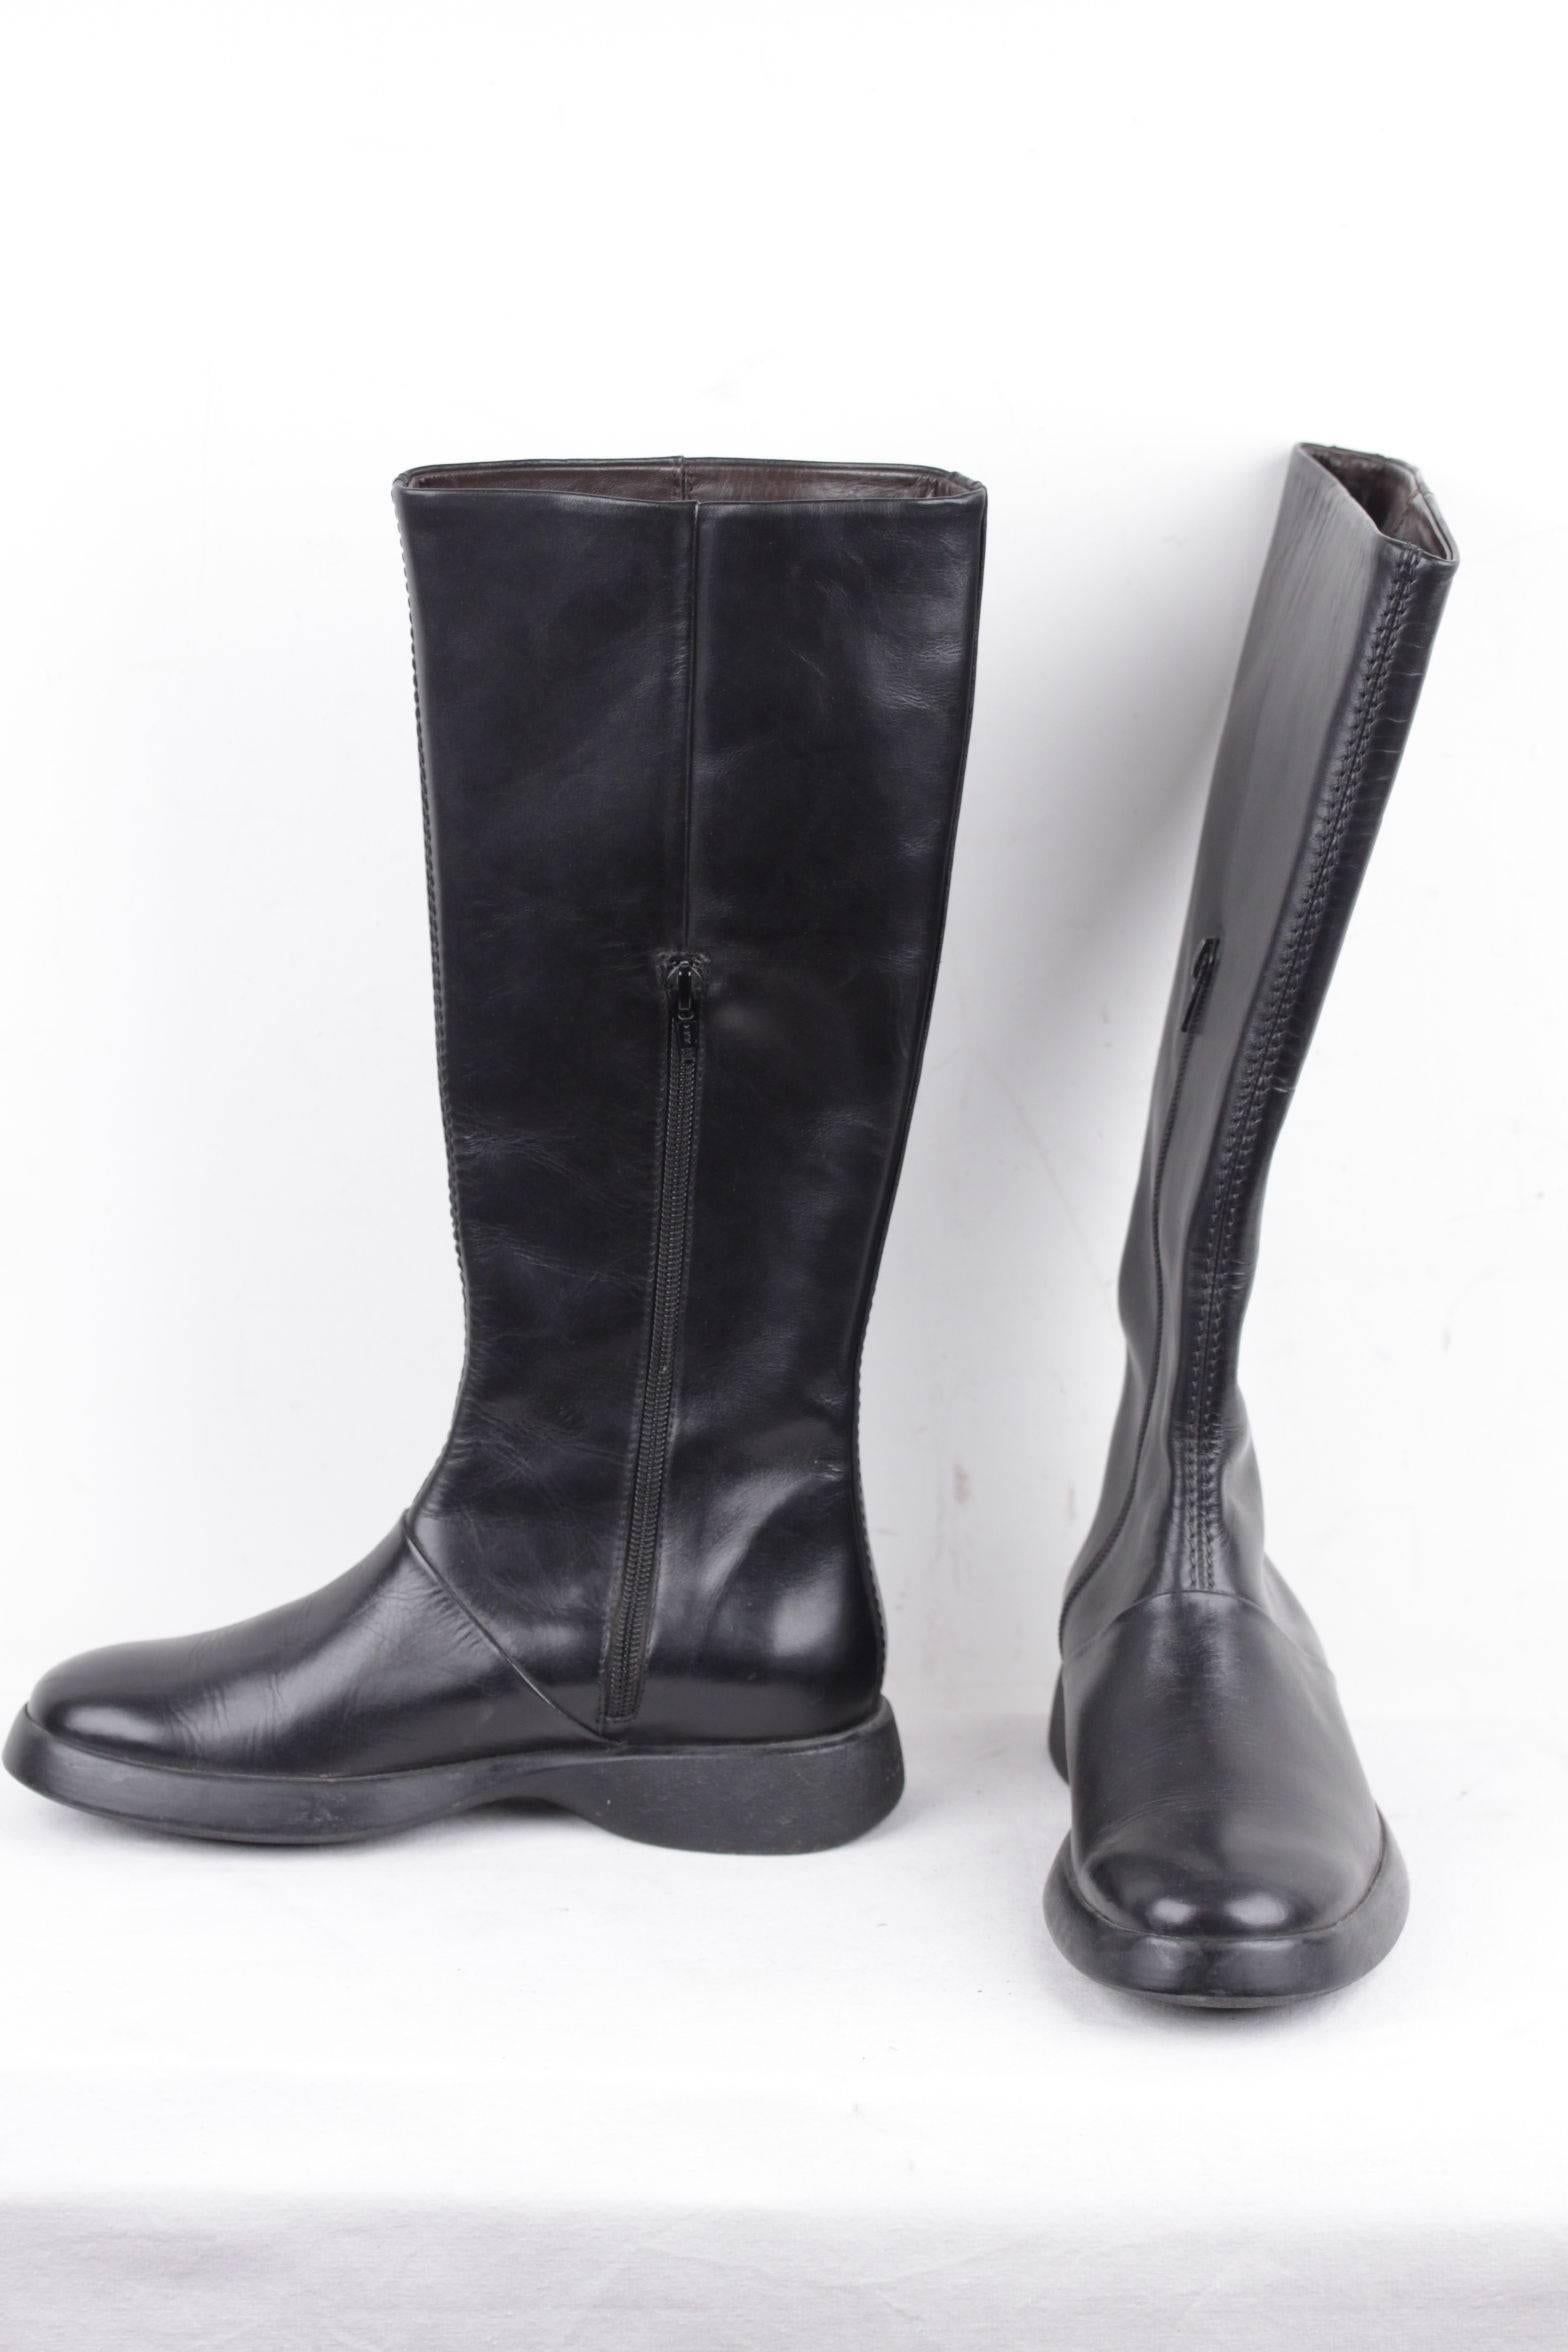 HOGAN Italian Black Leather BOOTS Shoes w/ RUBBER Sole SIZE 36 IT  3